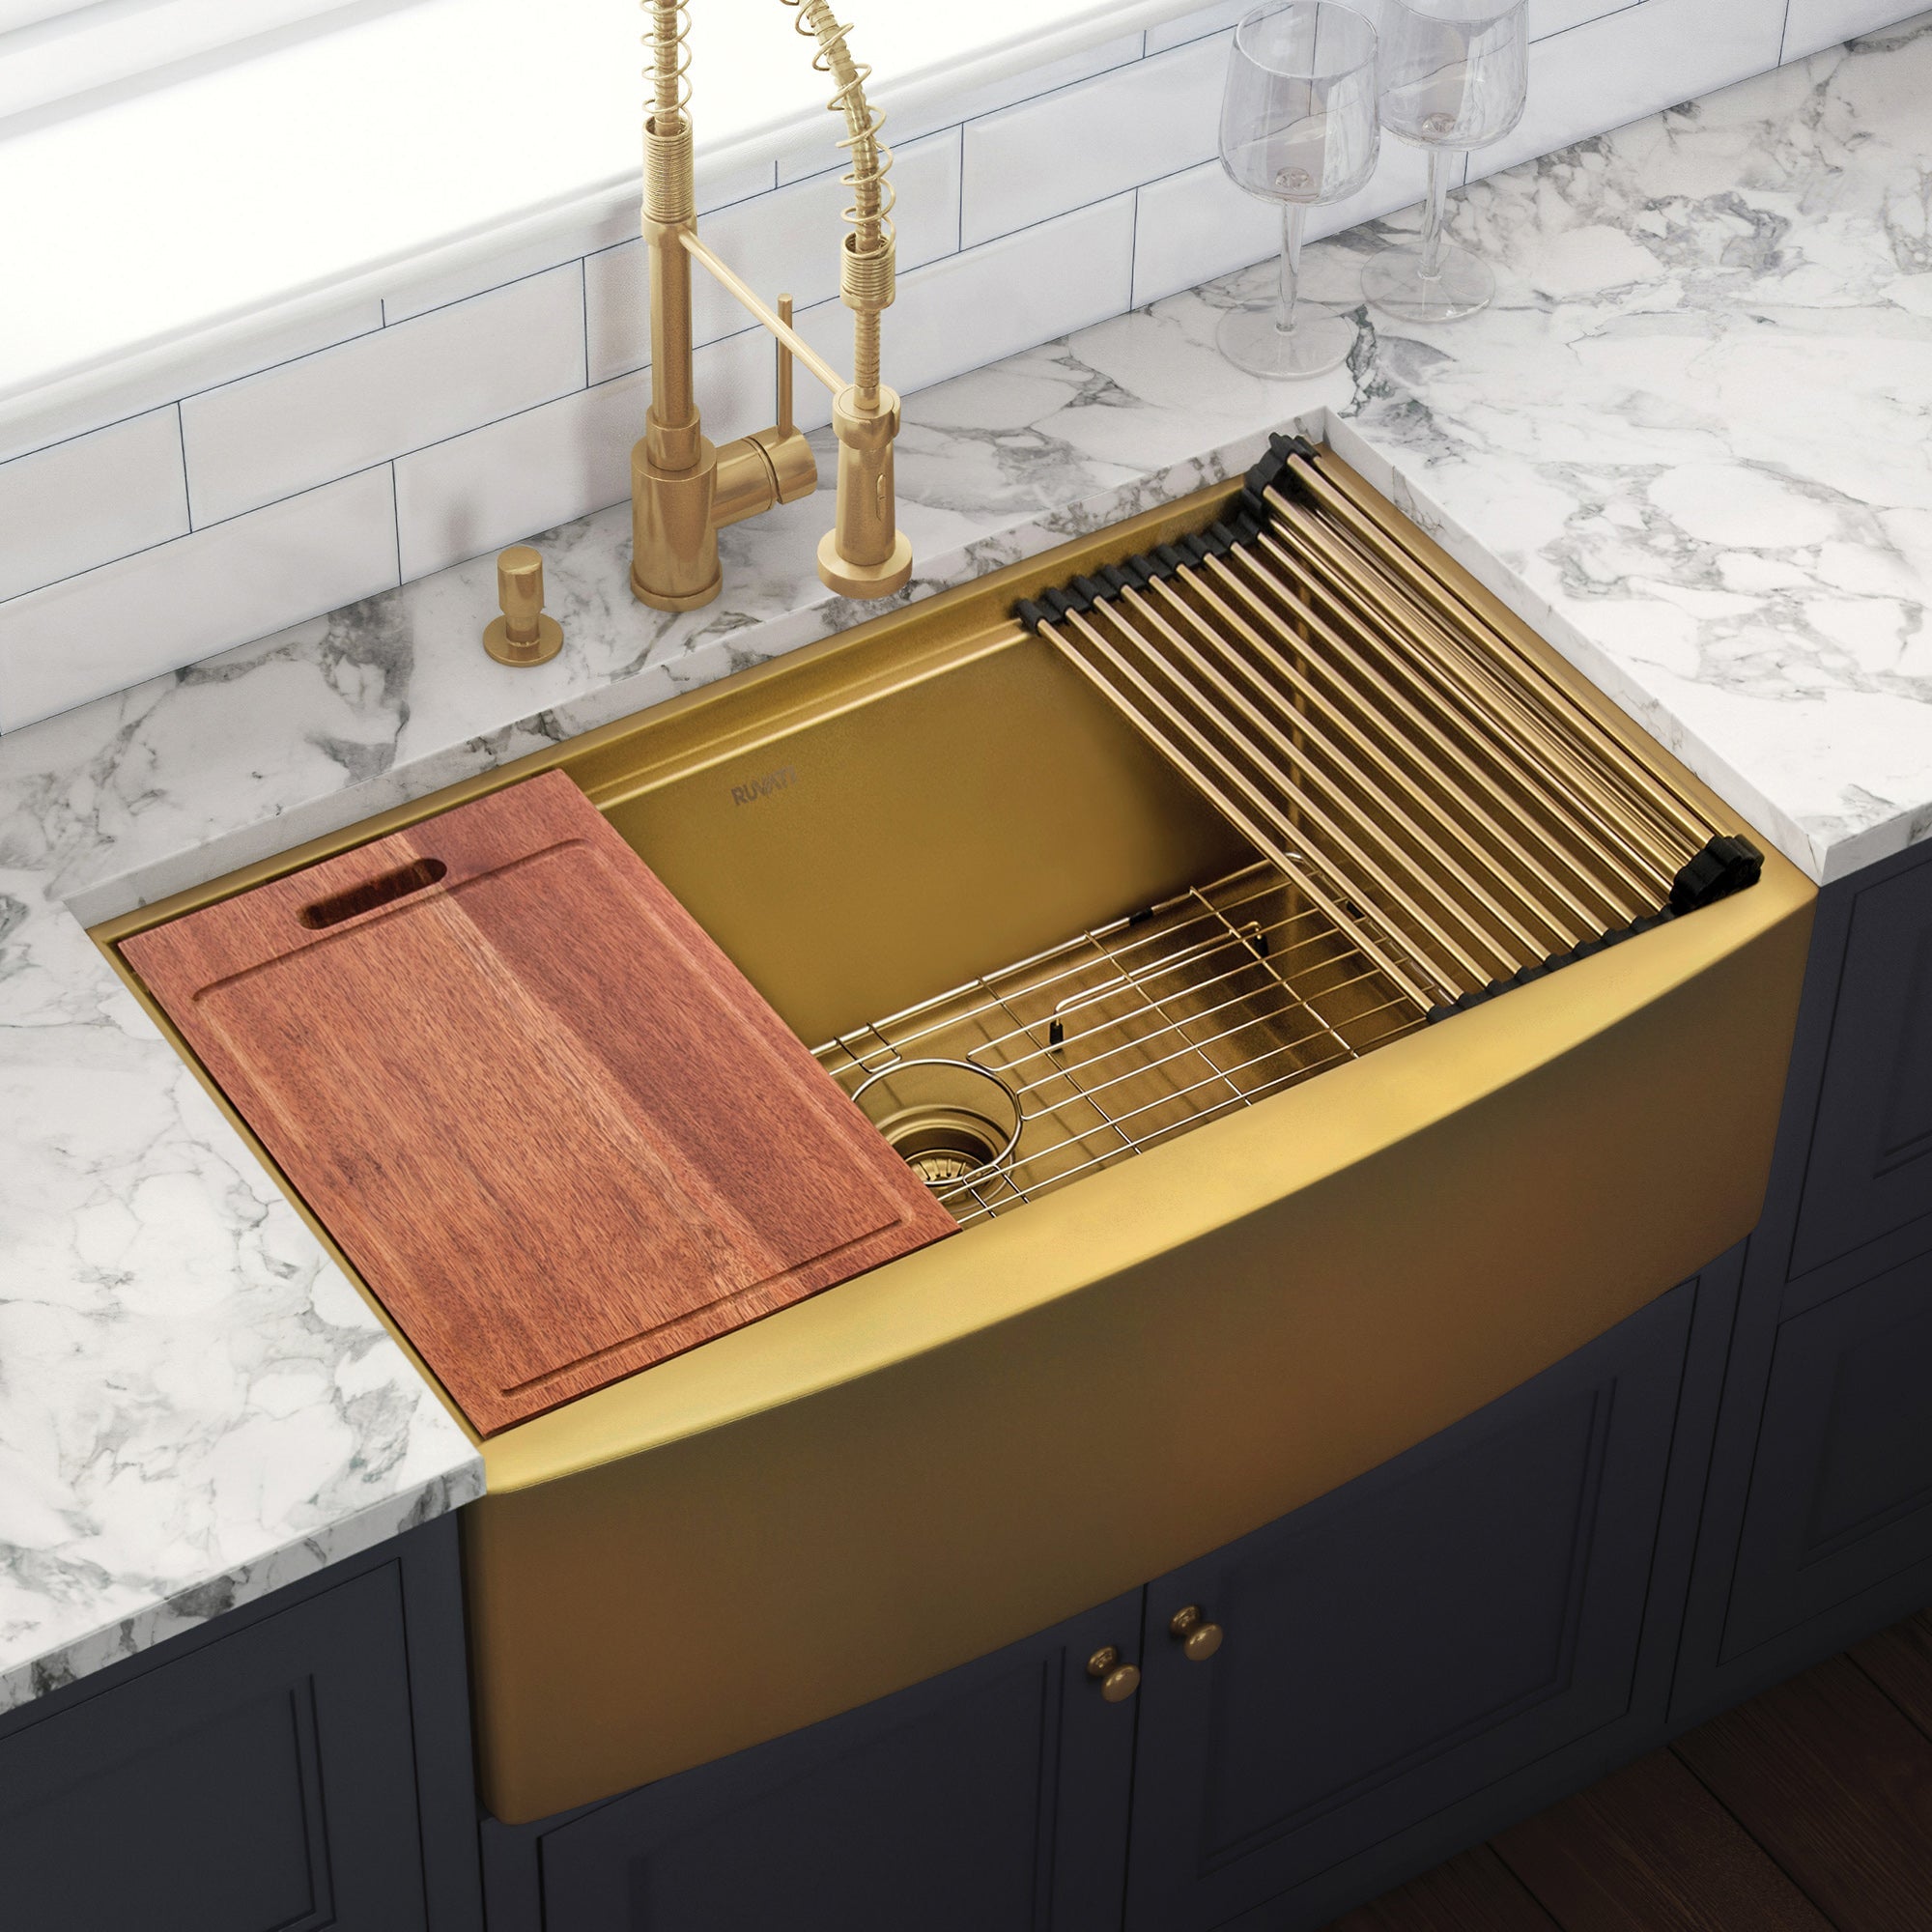 Ruvati 30" Matte Gold Workstation Apron Front Stainless Steel Kitchen Sink